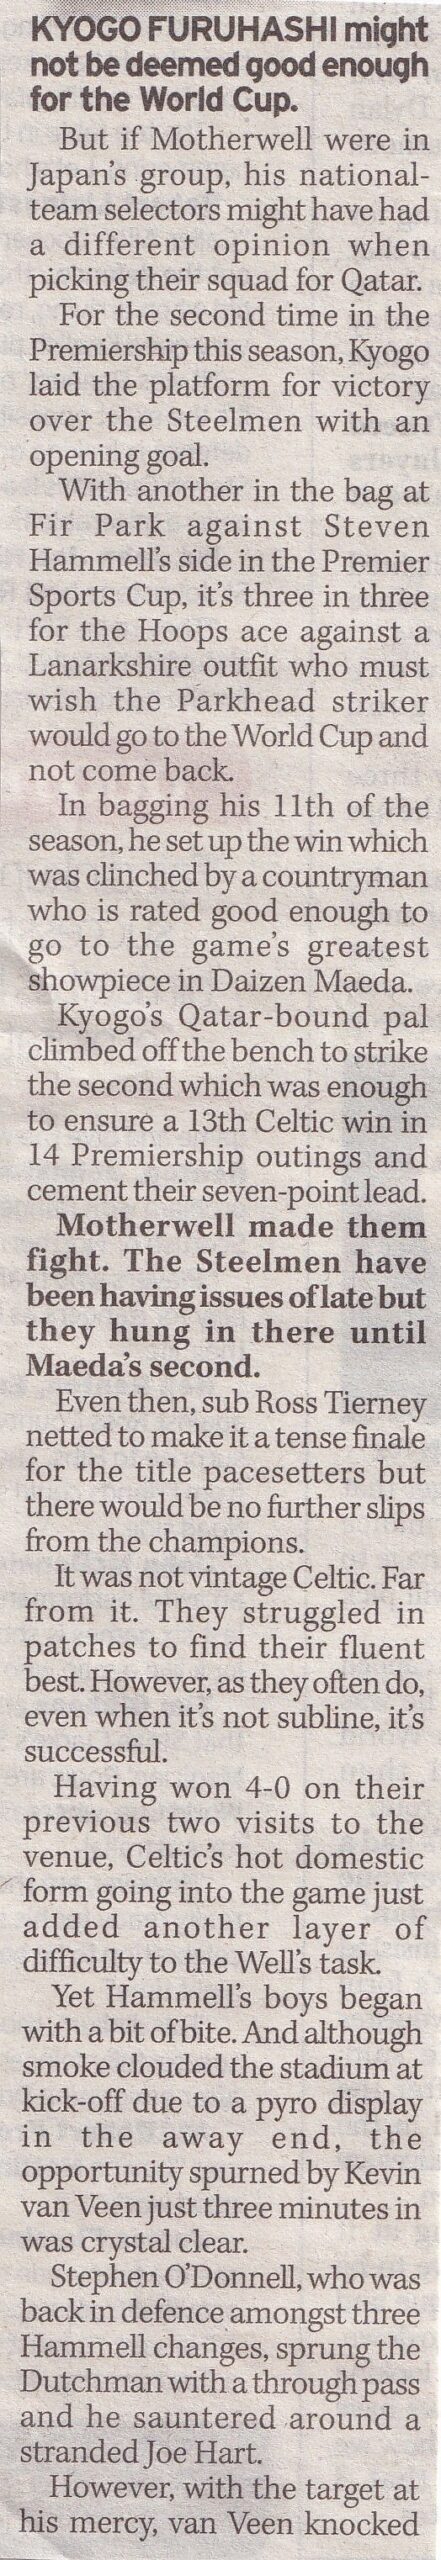 Motherwell vs Celtic Newspaper Match Report